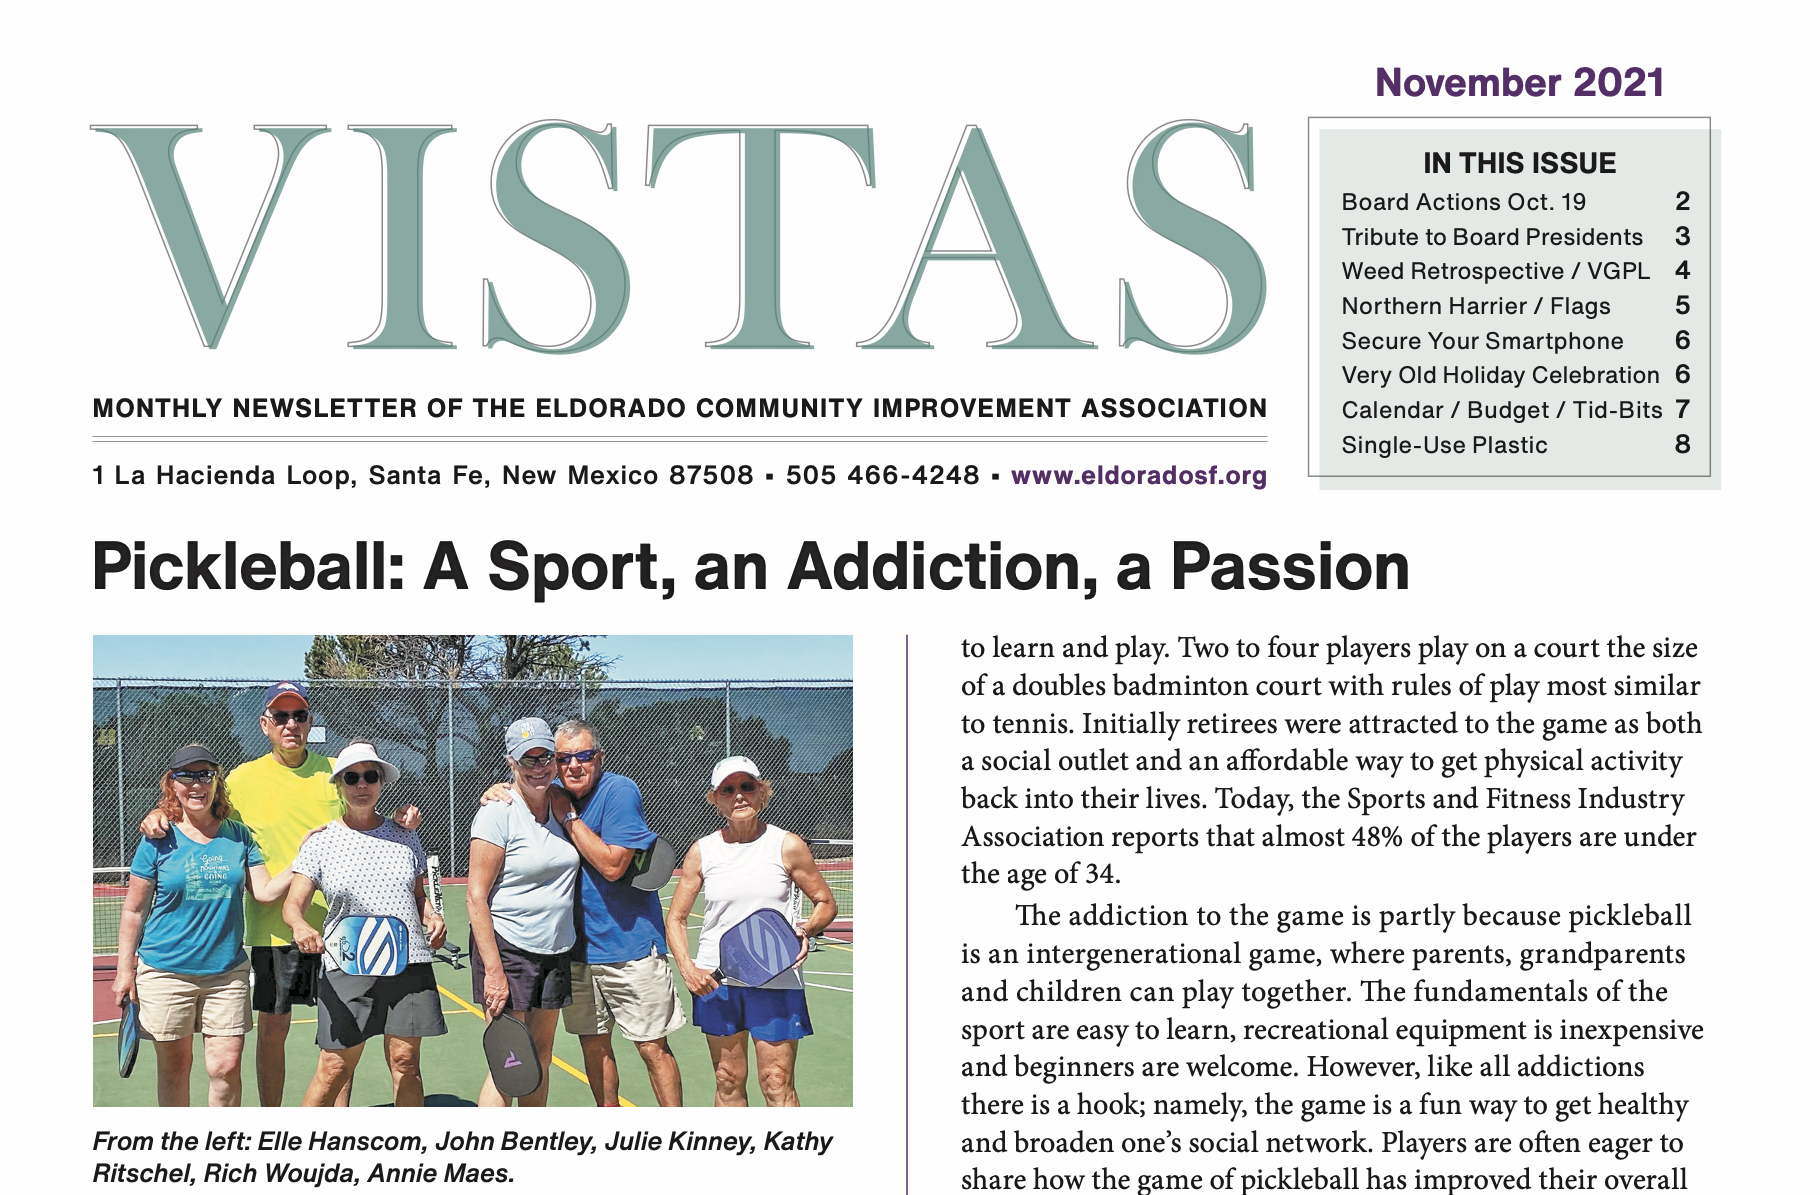 November Vistas Community Newsletter Now Available